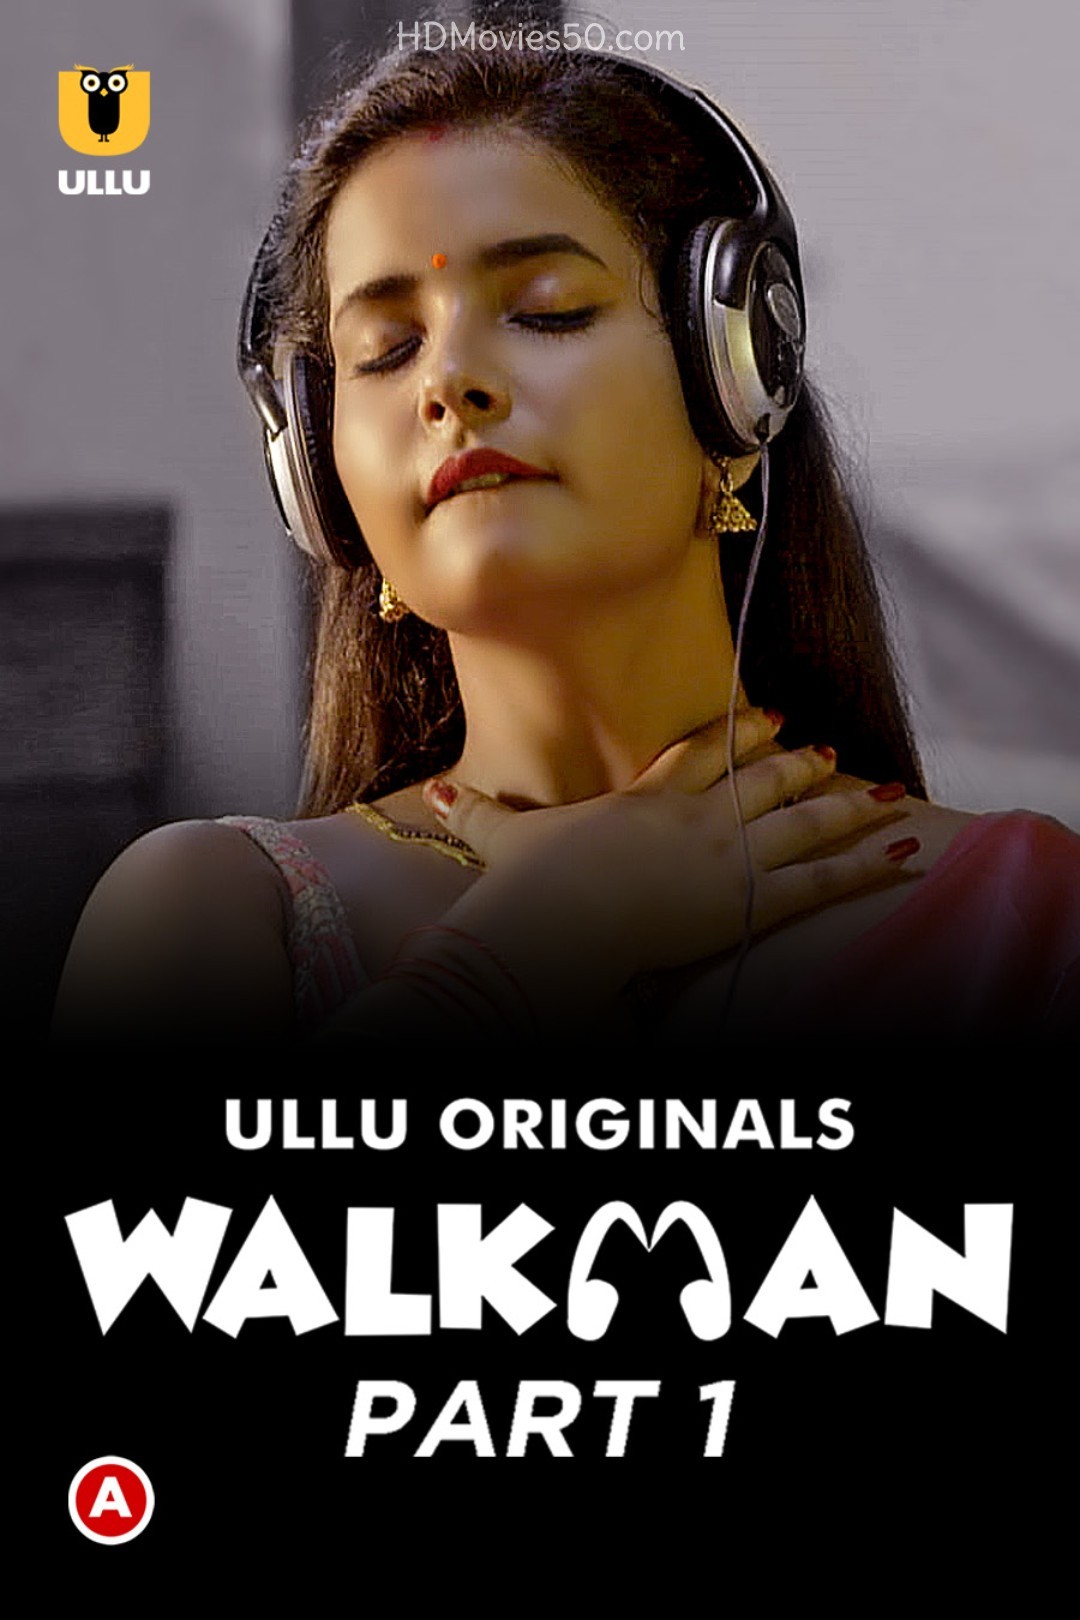 Walkman Part 1 (2022) 480p HDRip Ullu Hindi Web Series [250MB]